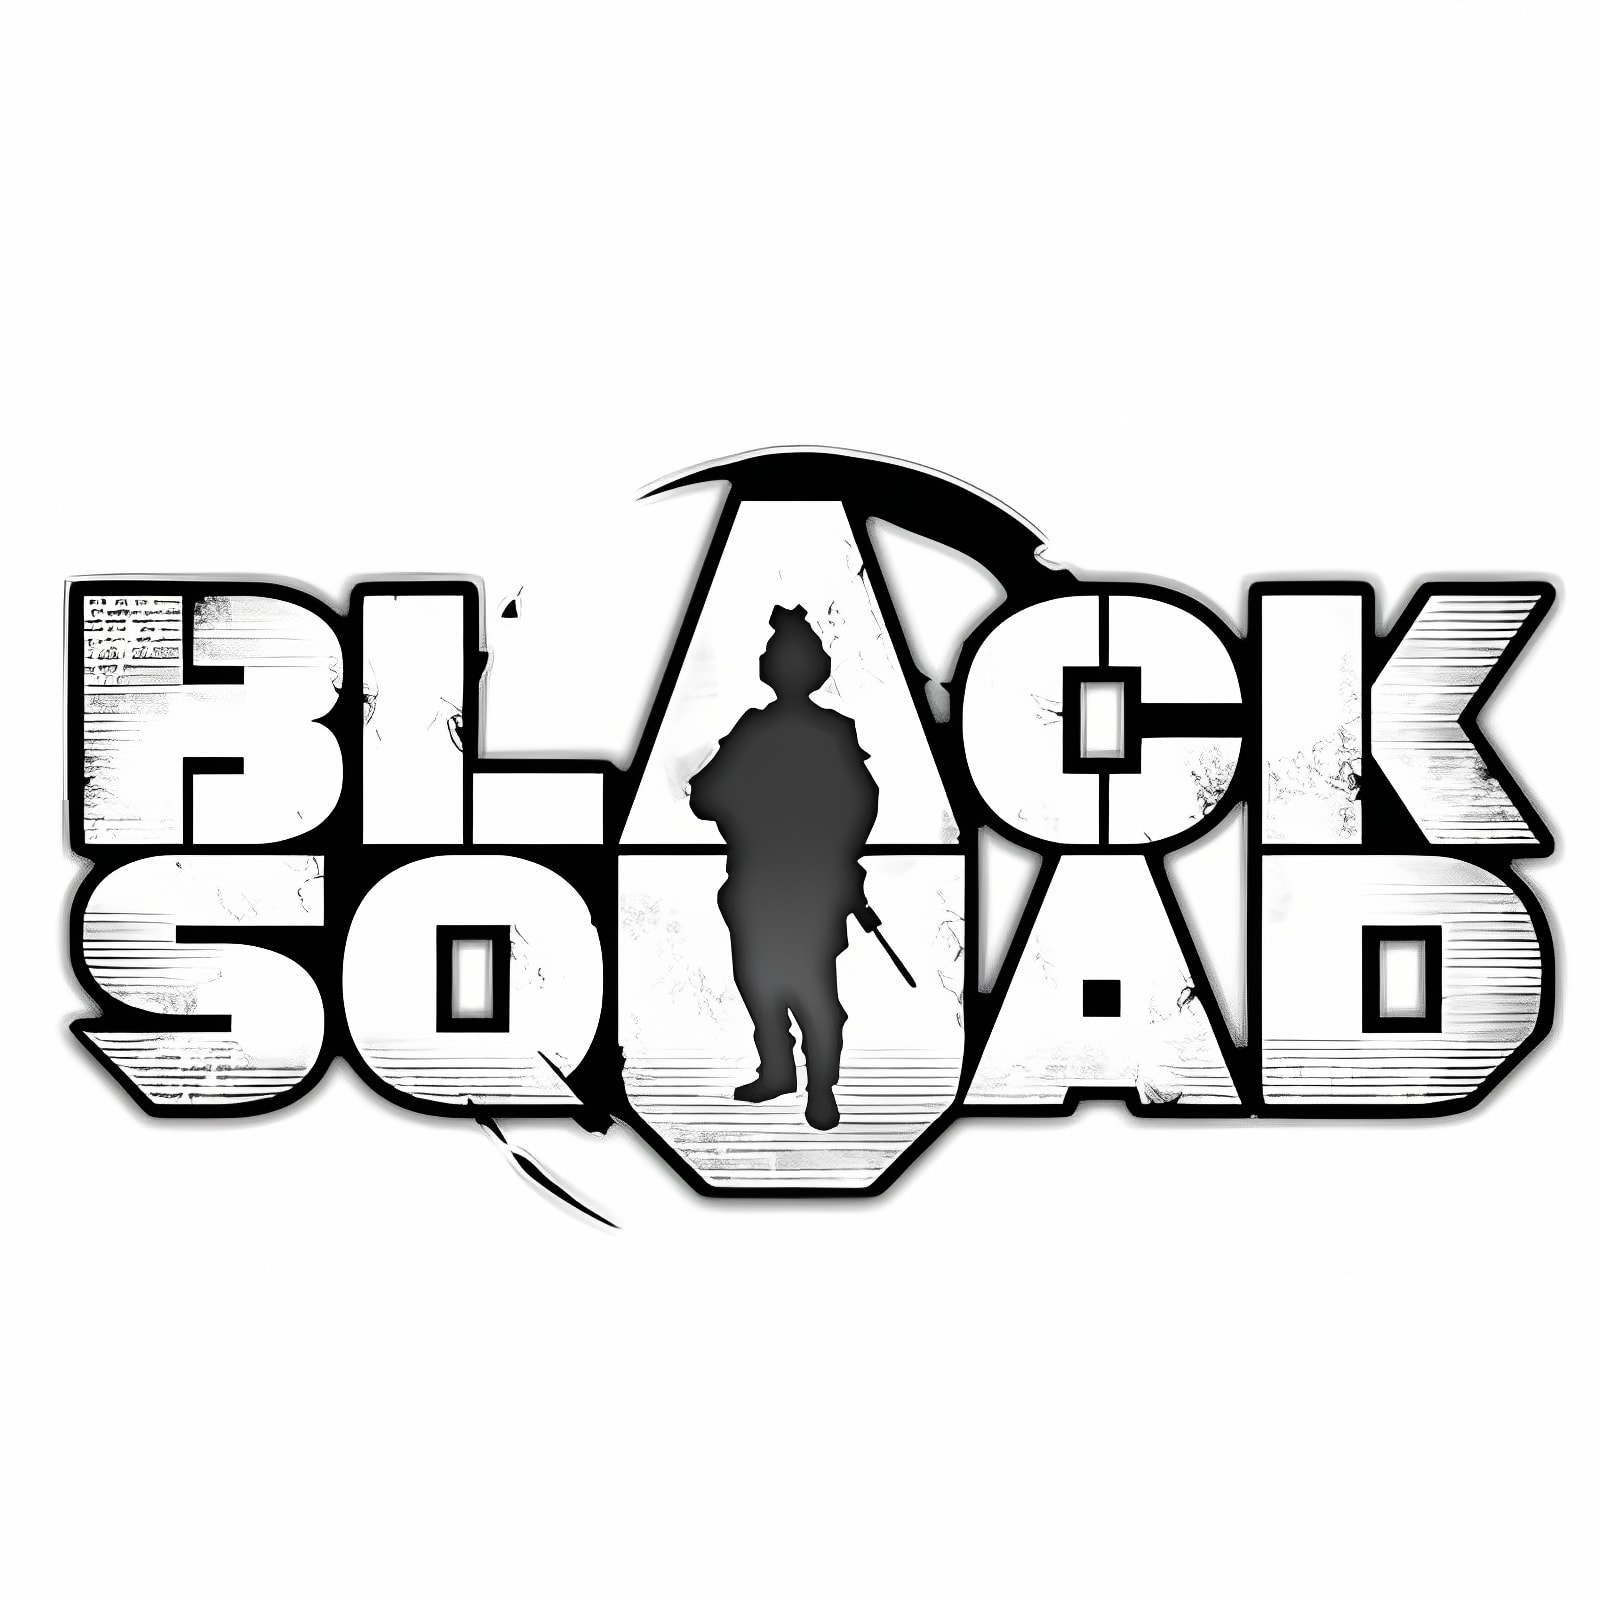 best ar in black squad